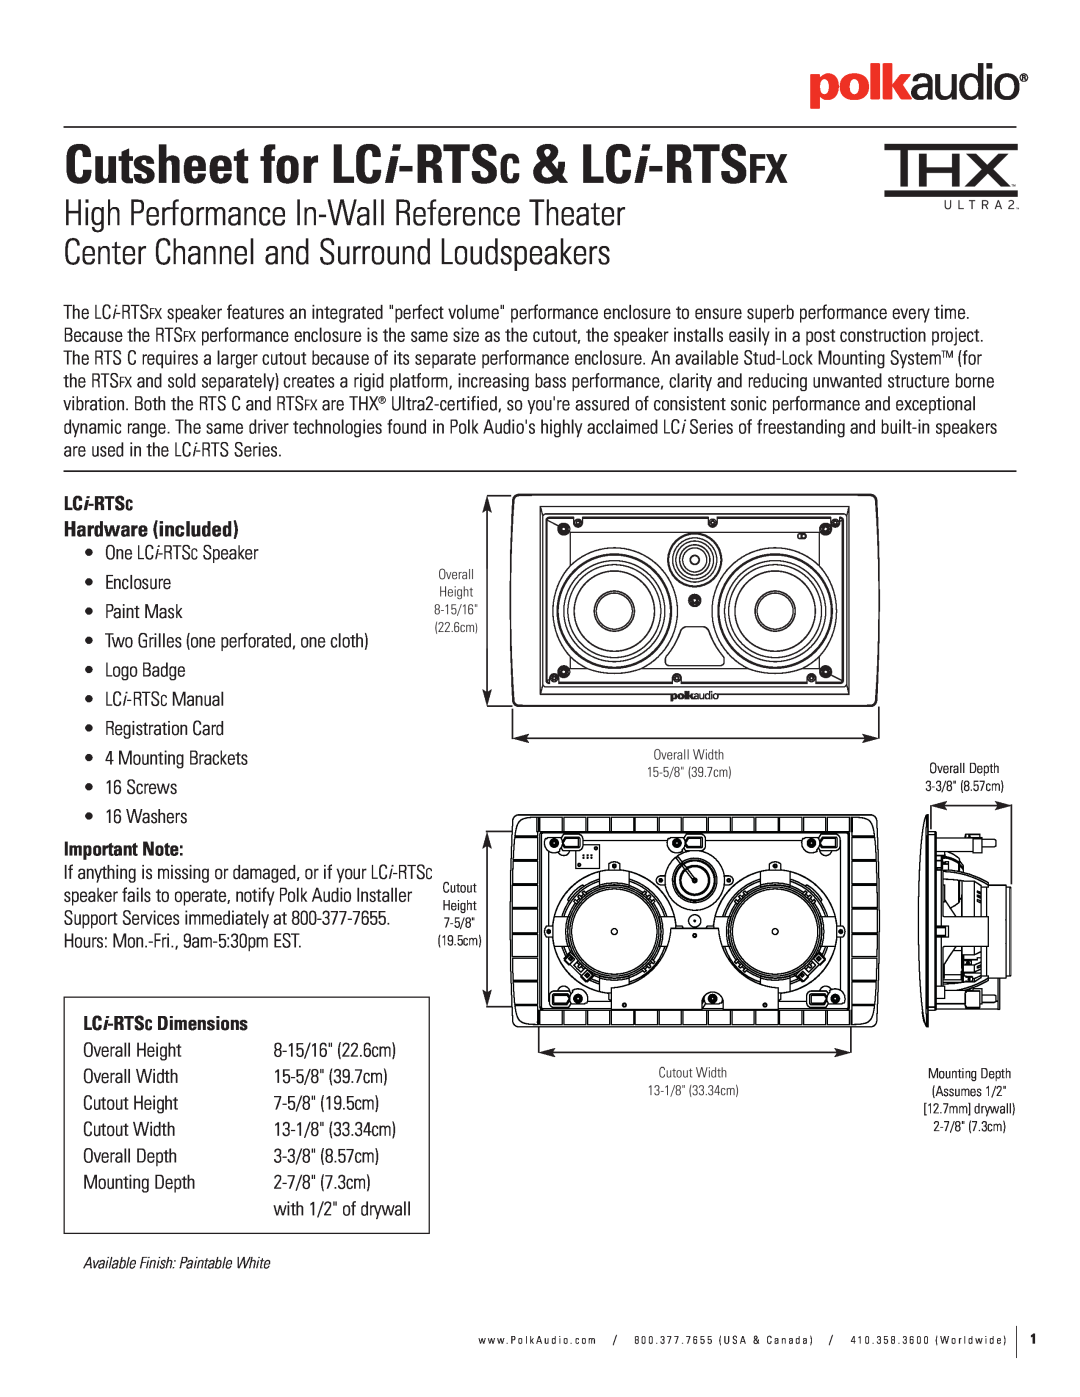 Polk Audio LCI-RTSC, LCI-RTSFX dimensions Important Note, Cutsheet for LCi-RTSC & LCi-RTSFX, Hardware included 